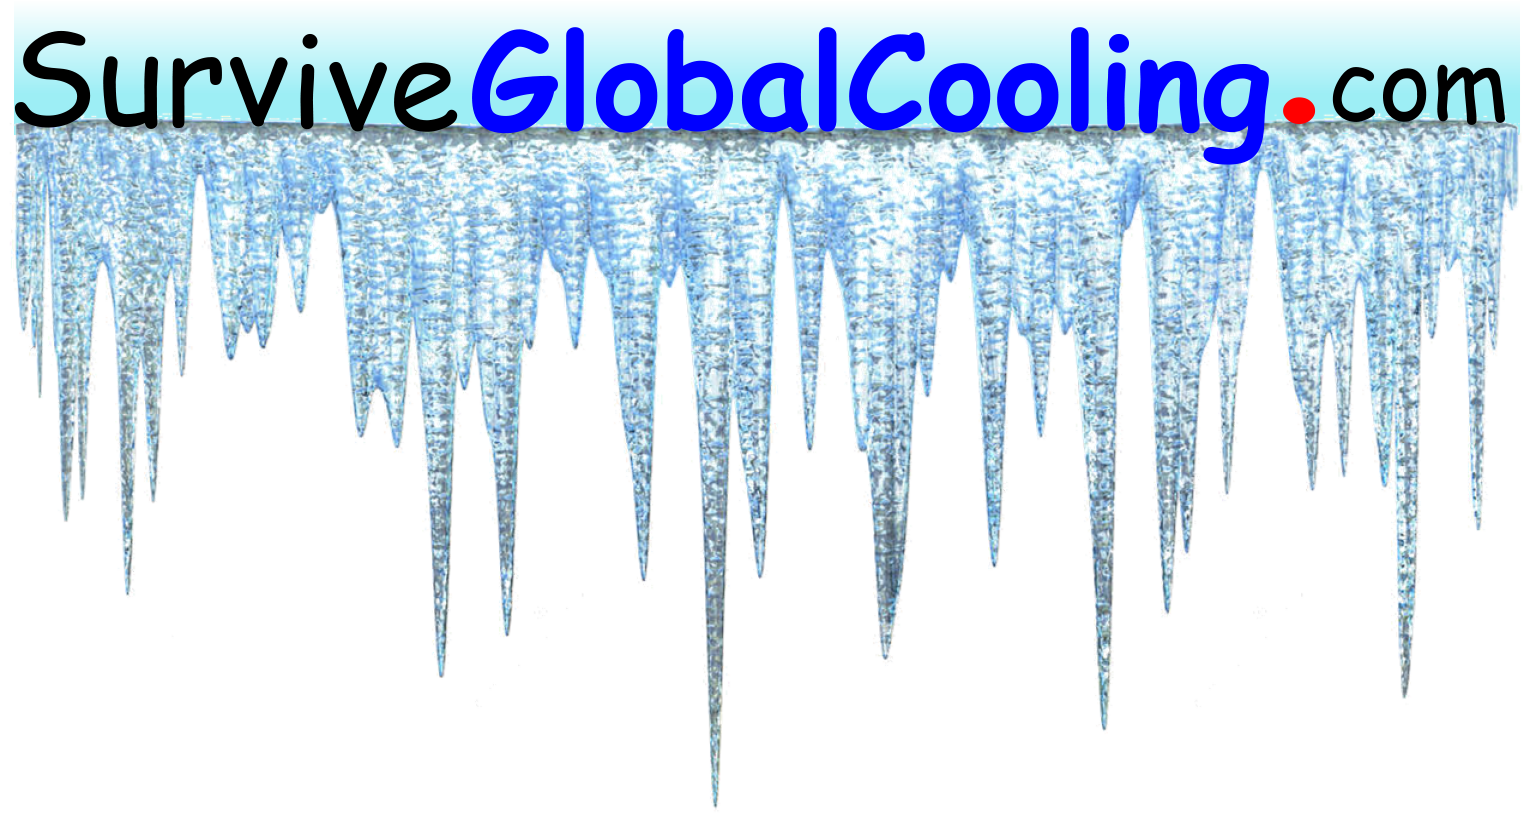 Survive Global Cooling